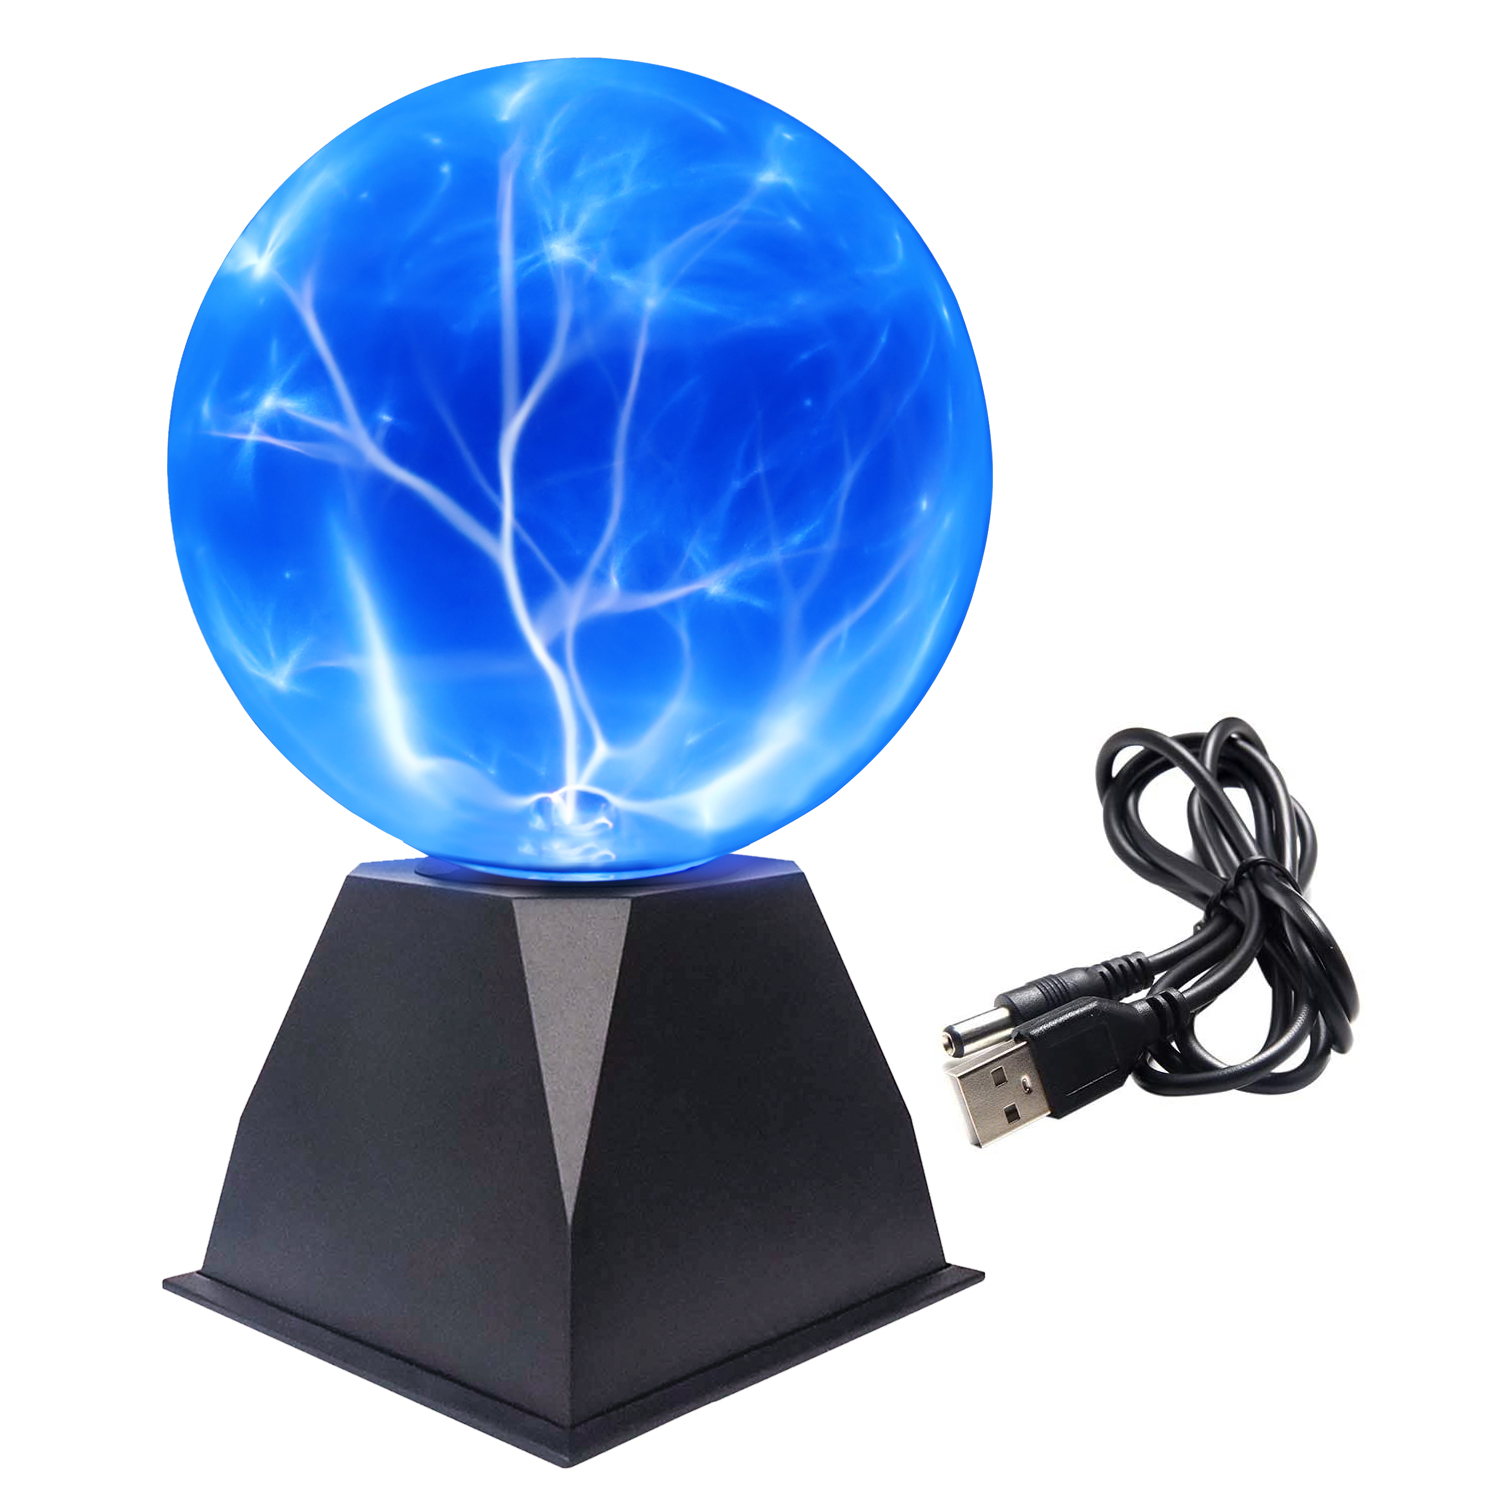 6 inch plasma ball with blue light